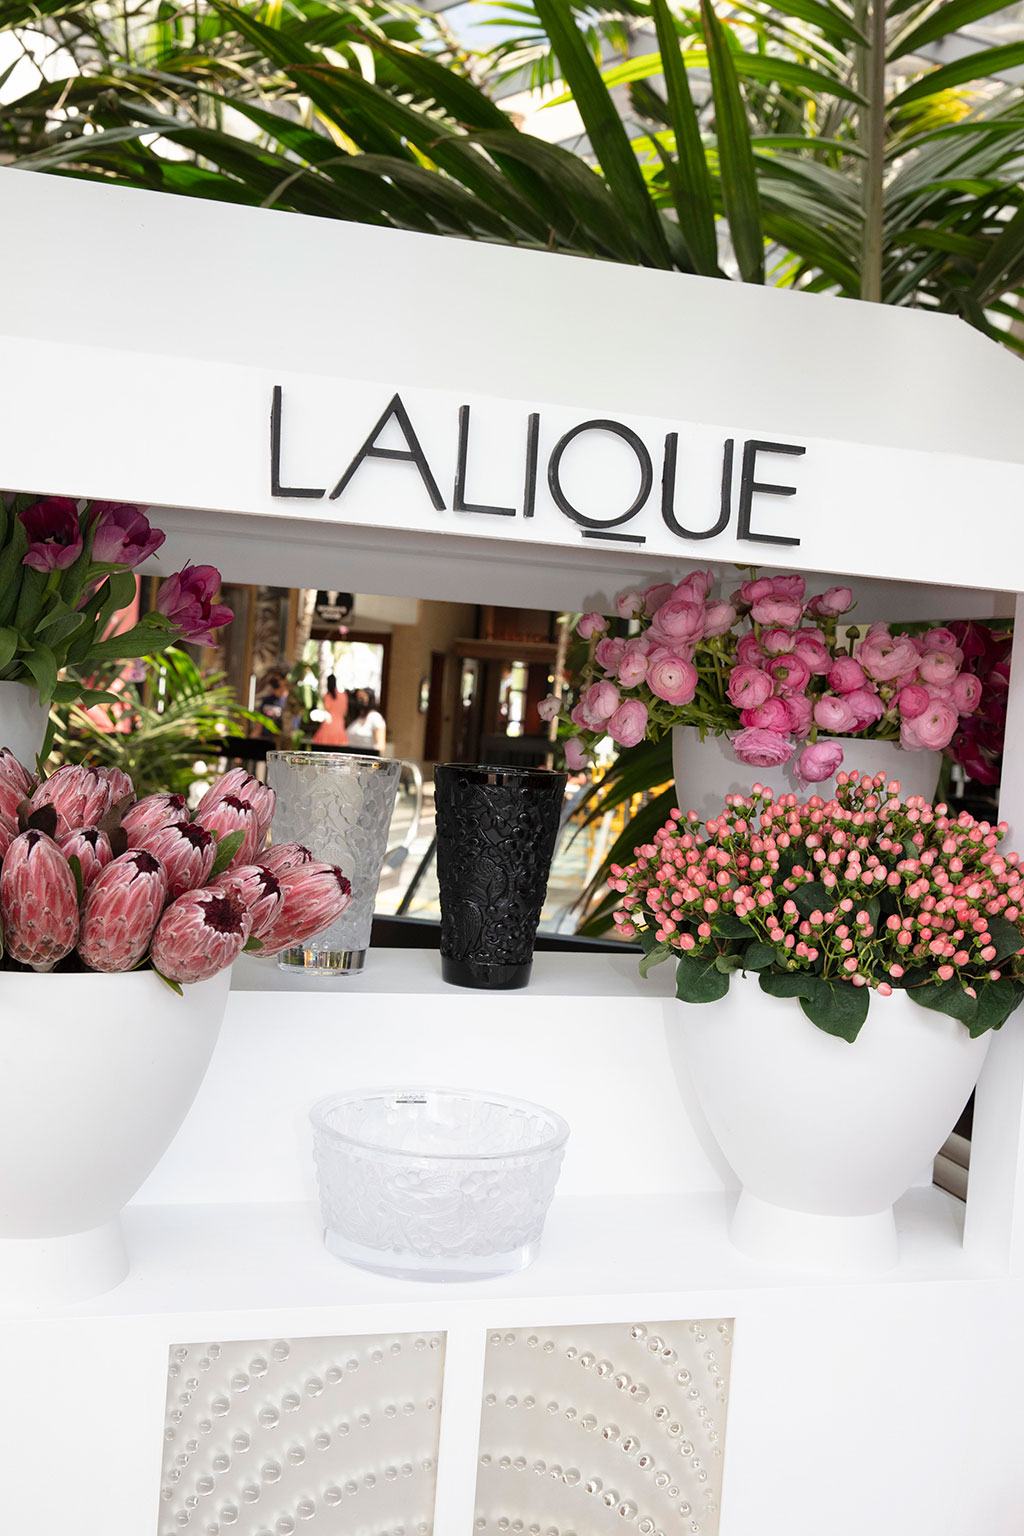 Lalique Flower Cart. Photo by Theodora Richter